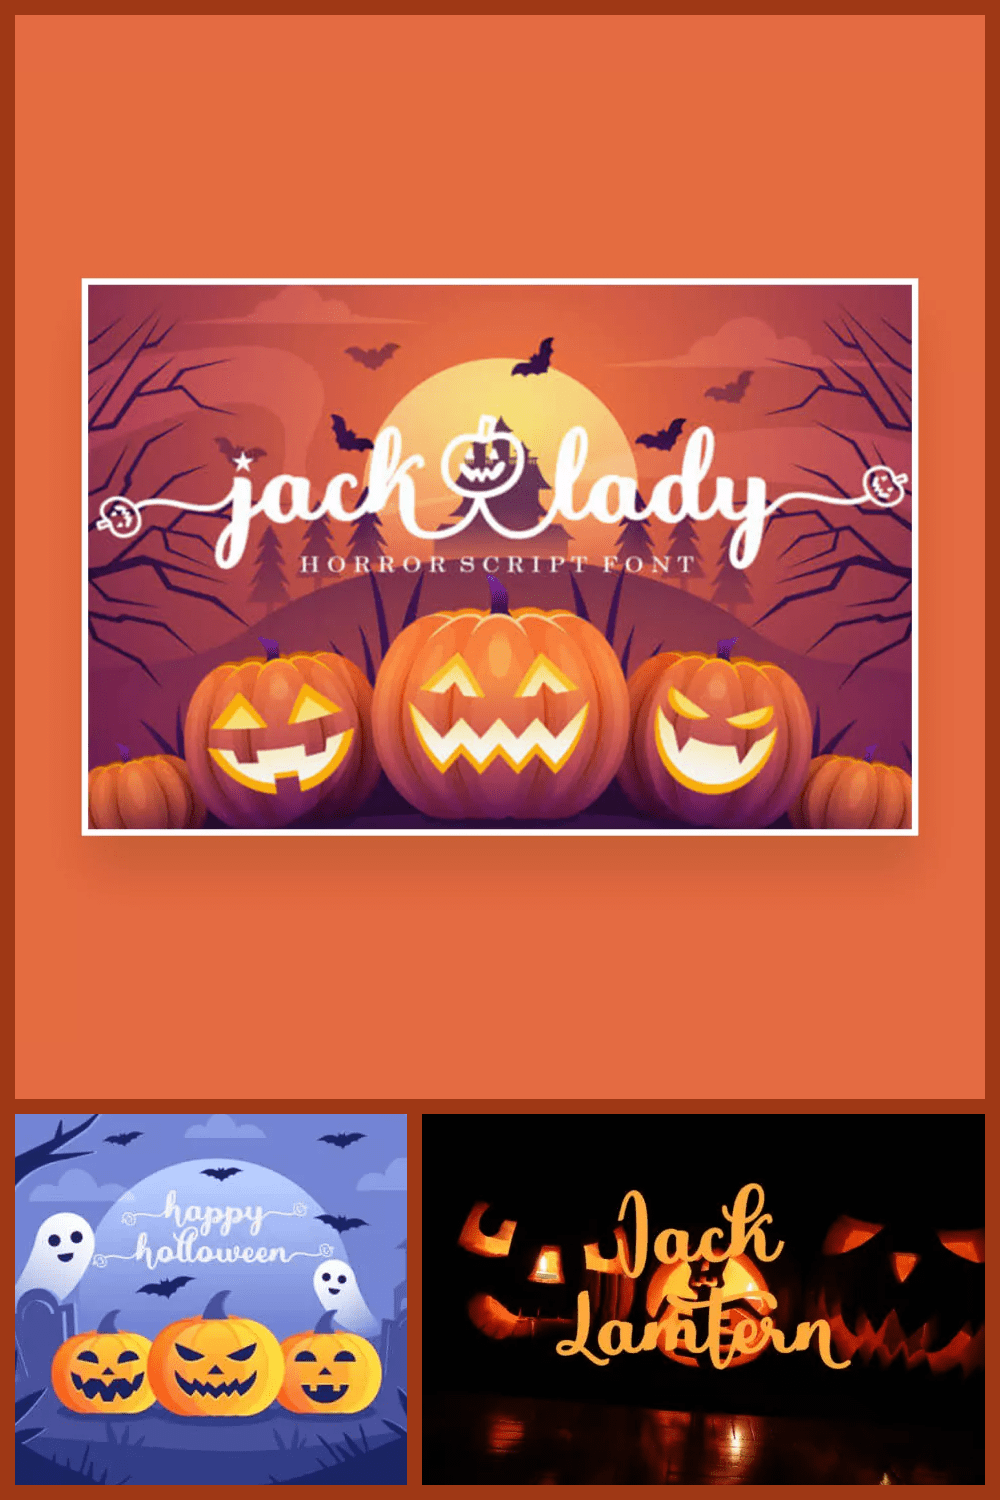 Jack Lady Spooky and Cursive Script Font.